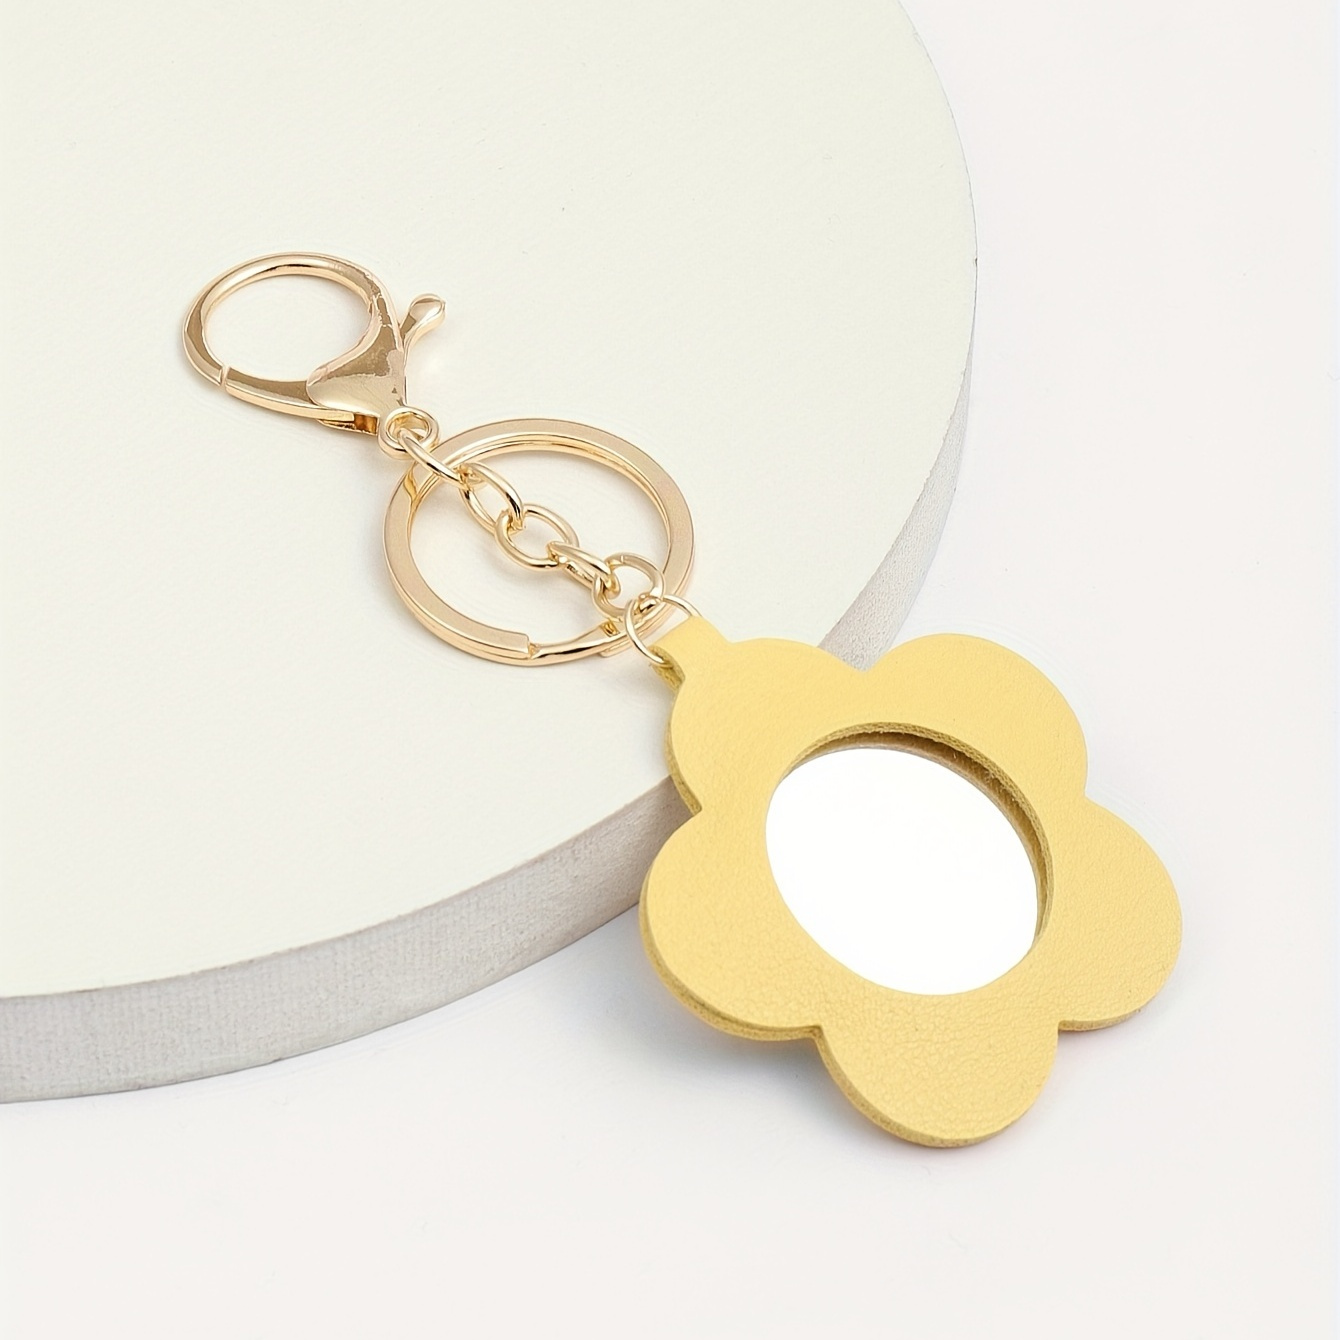 Shein 2pcs Mini Disco Ball Keychain Cute Shiny Key Chain Ring Bag Backpack Charm Phone Pendant Women Girls Gift